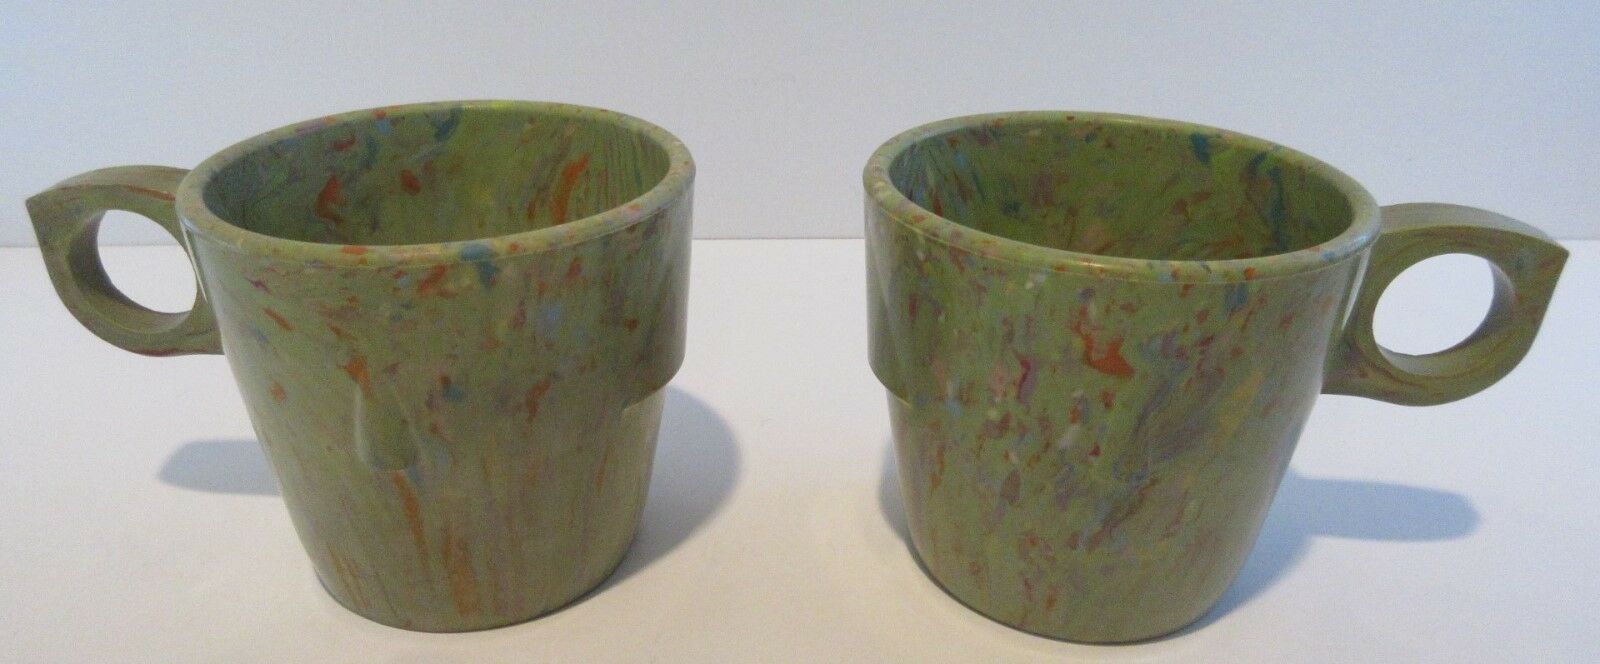 2 VTG Prolon Melamine Confetti Melmac TEXAS Ware Speckle Coffee Cups Mugs Green